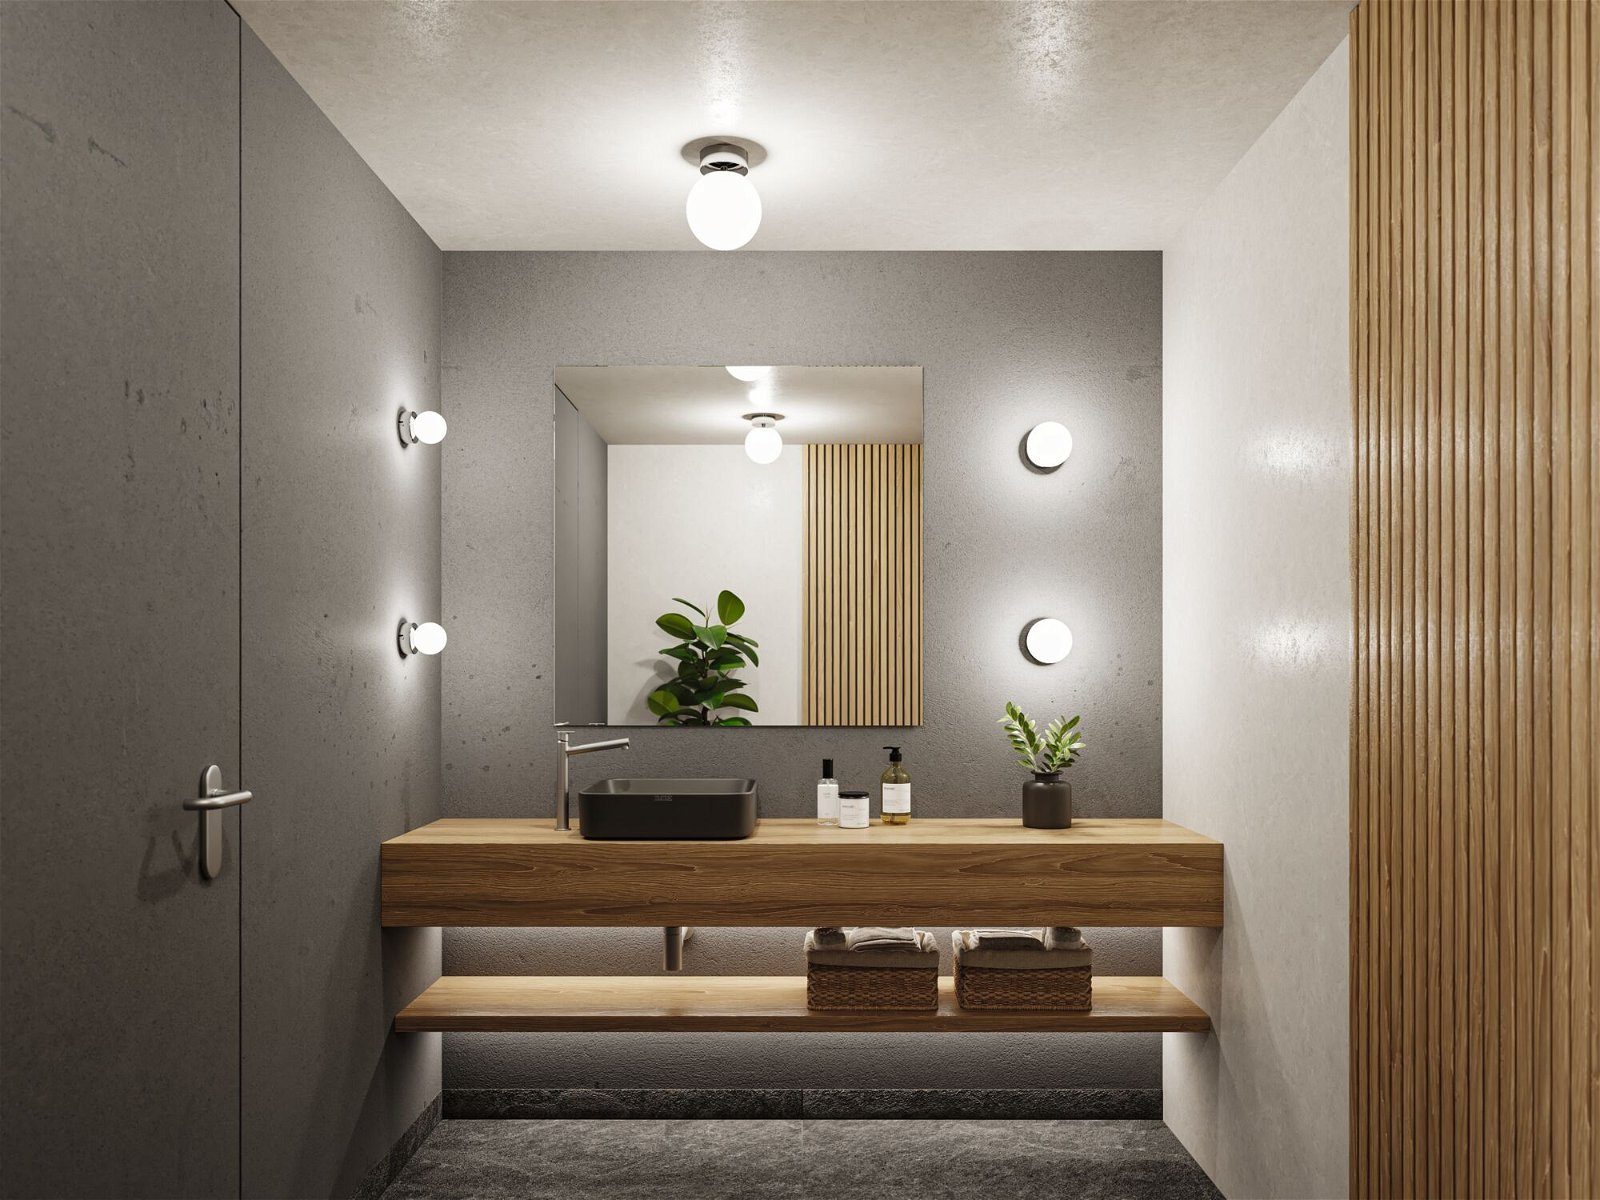 Gove Bathroom fest IP44 Satin/Chrom 3000K LED Glas/Metall, 9W Warmweiß Paulmann LED Deckenleuchte integriert, Selection